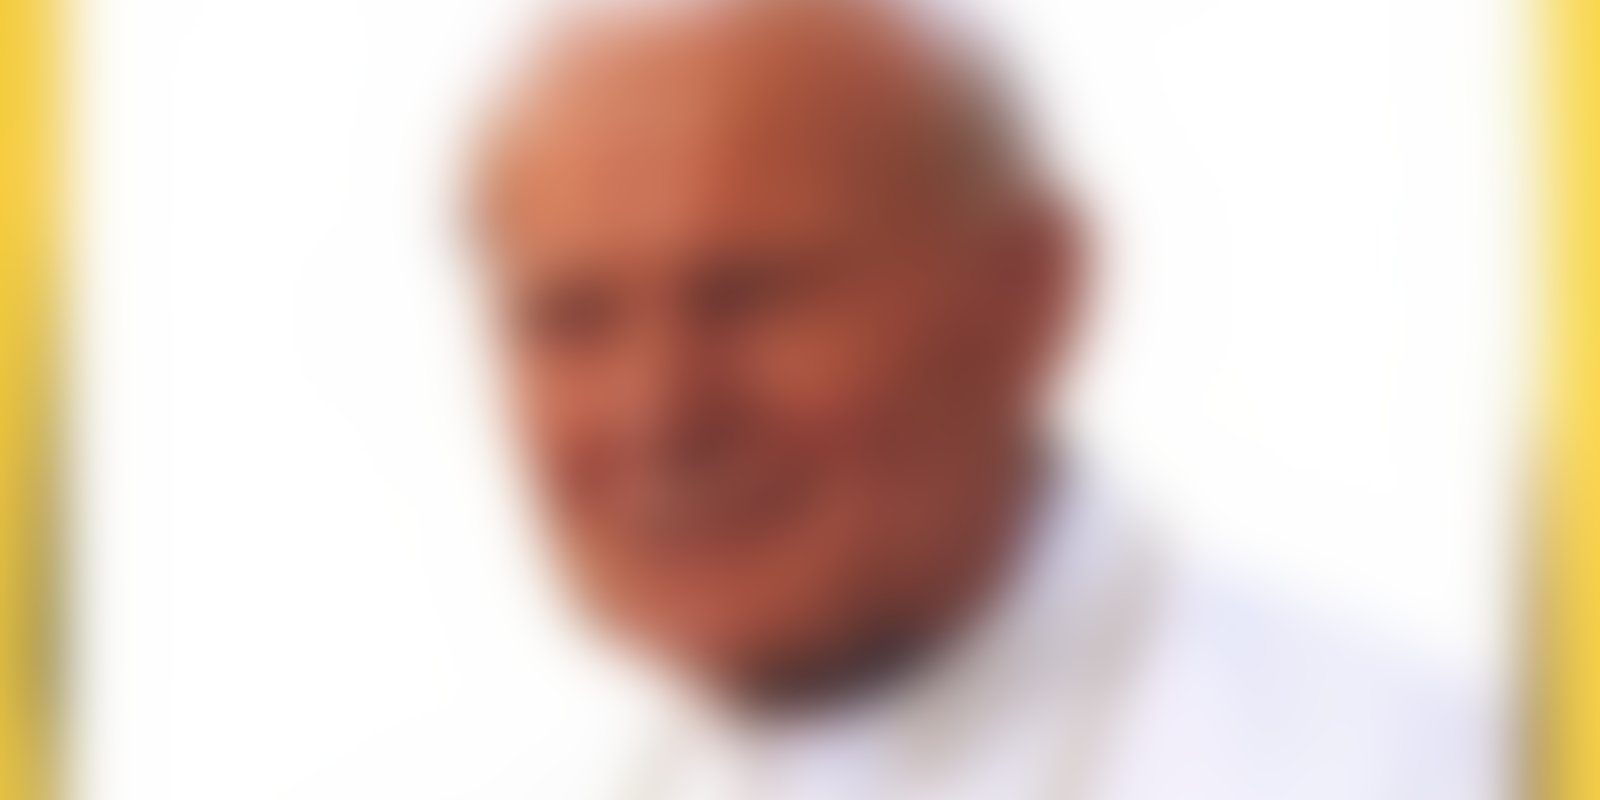 Papst Johannes Paul II. - Die Biographie